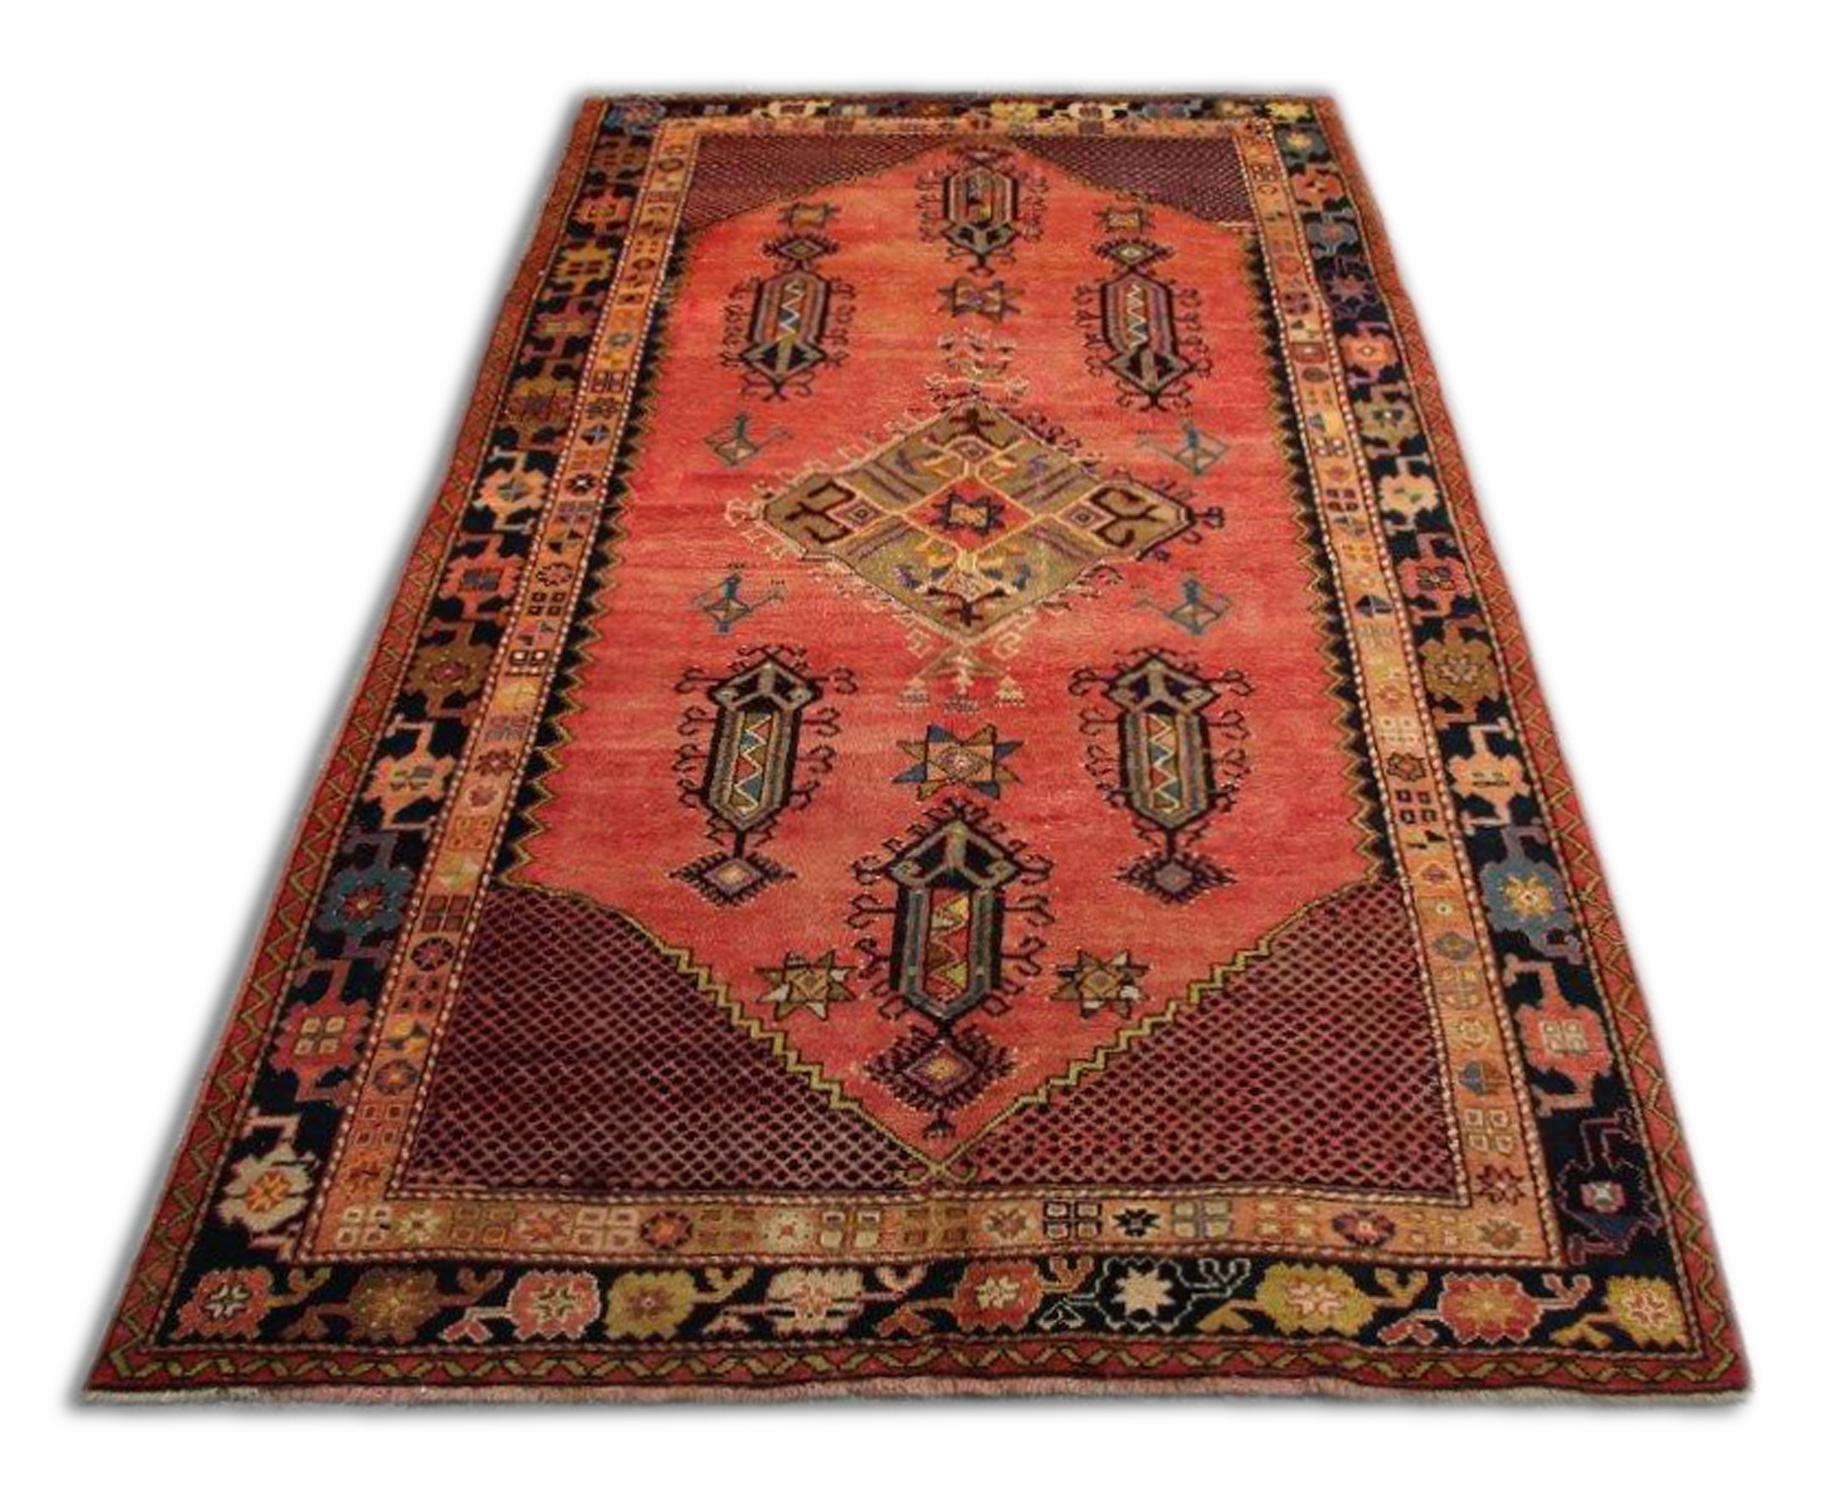 Early 20th Century Antique Turkish Rug Handmade Carpet Oriental Rust Brown Geometric Rug For Sale